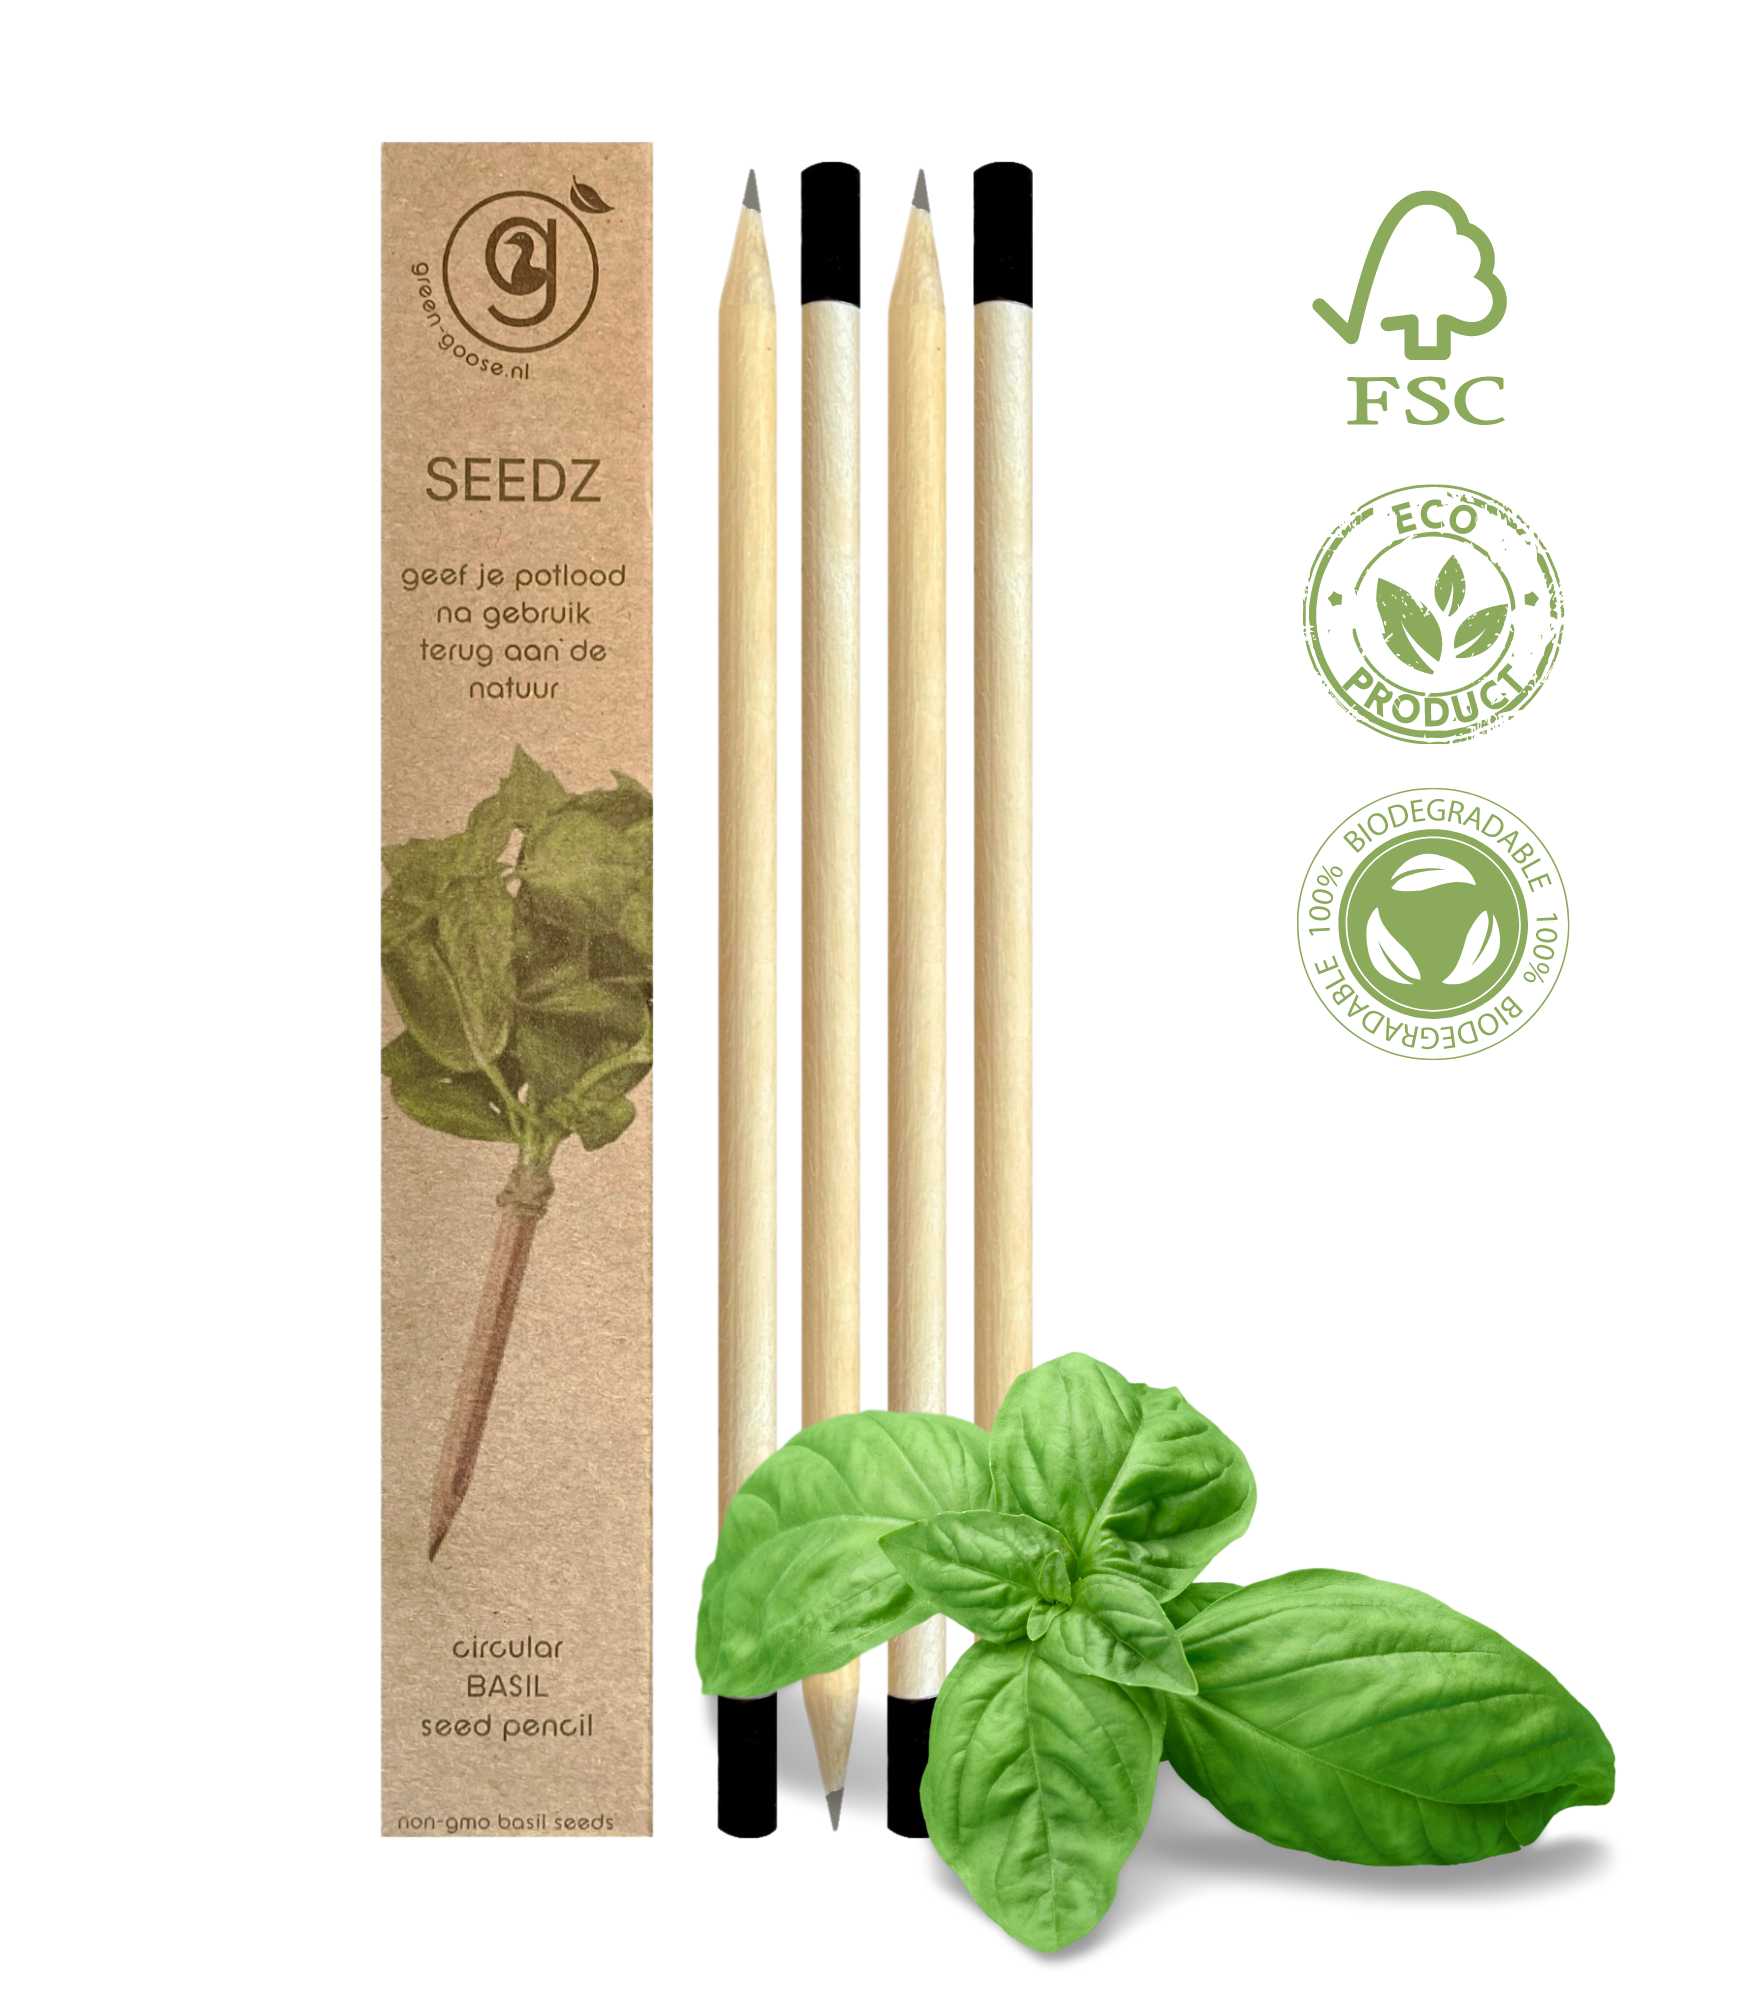 Seedz Flower Pencil | 4 Pieces | Basil green-goose